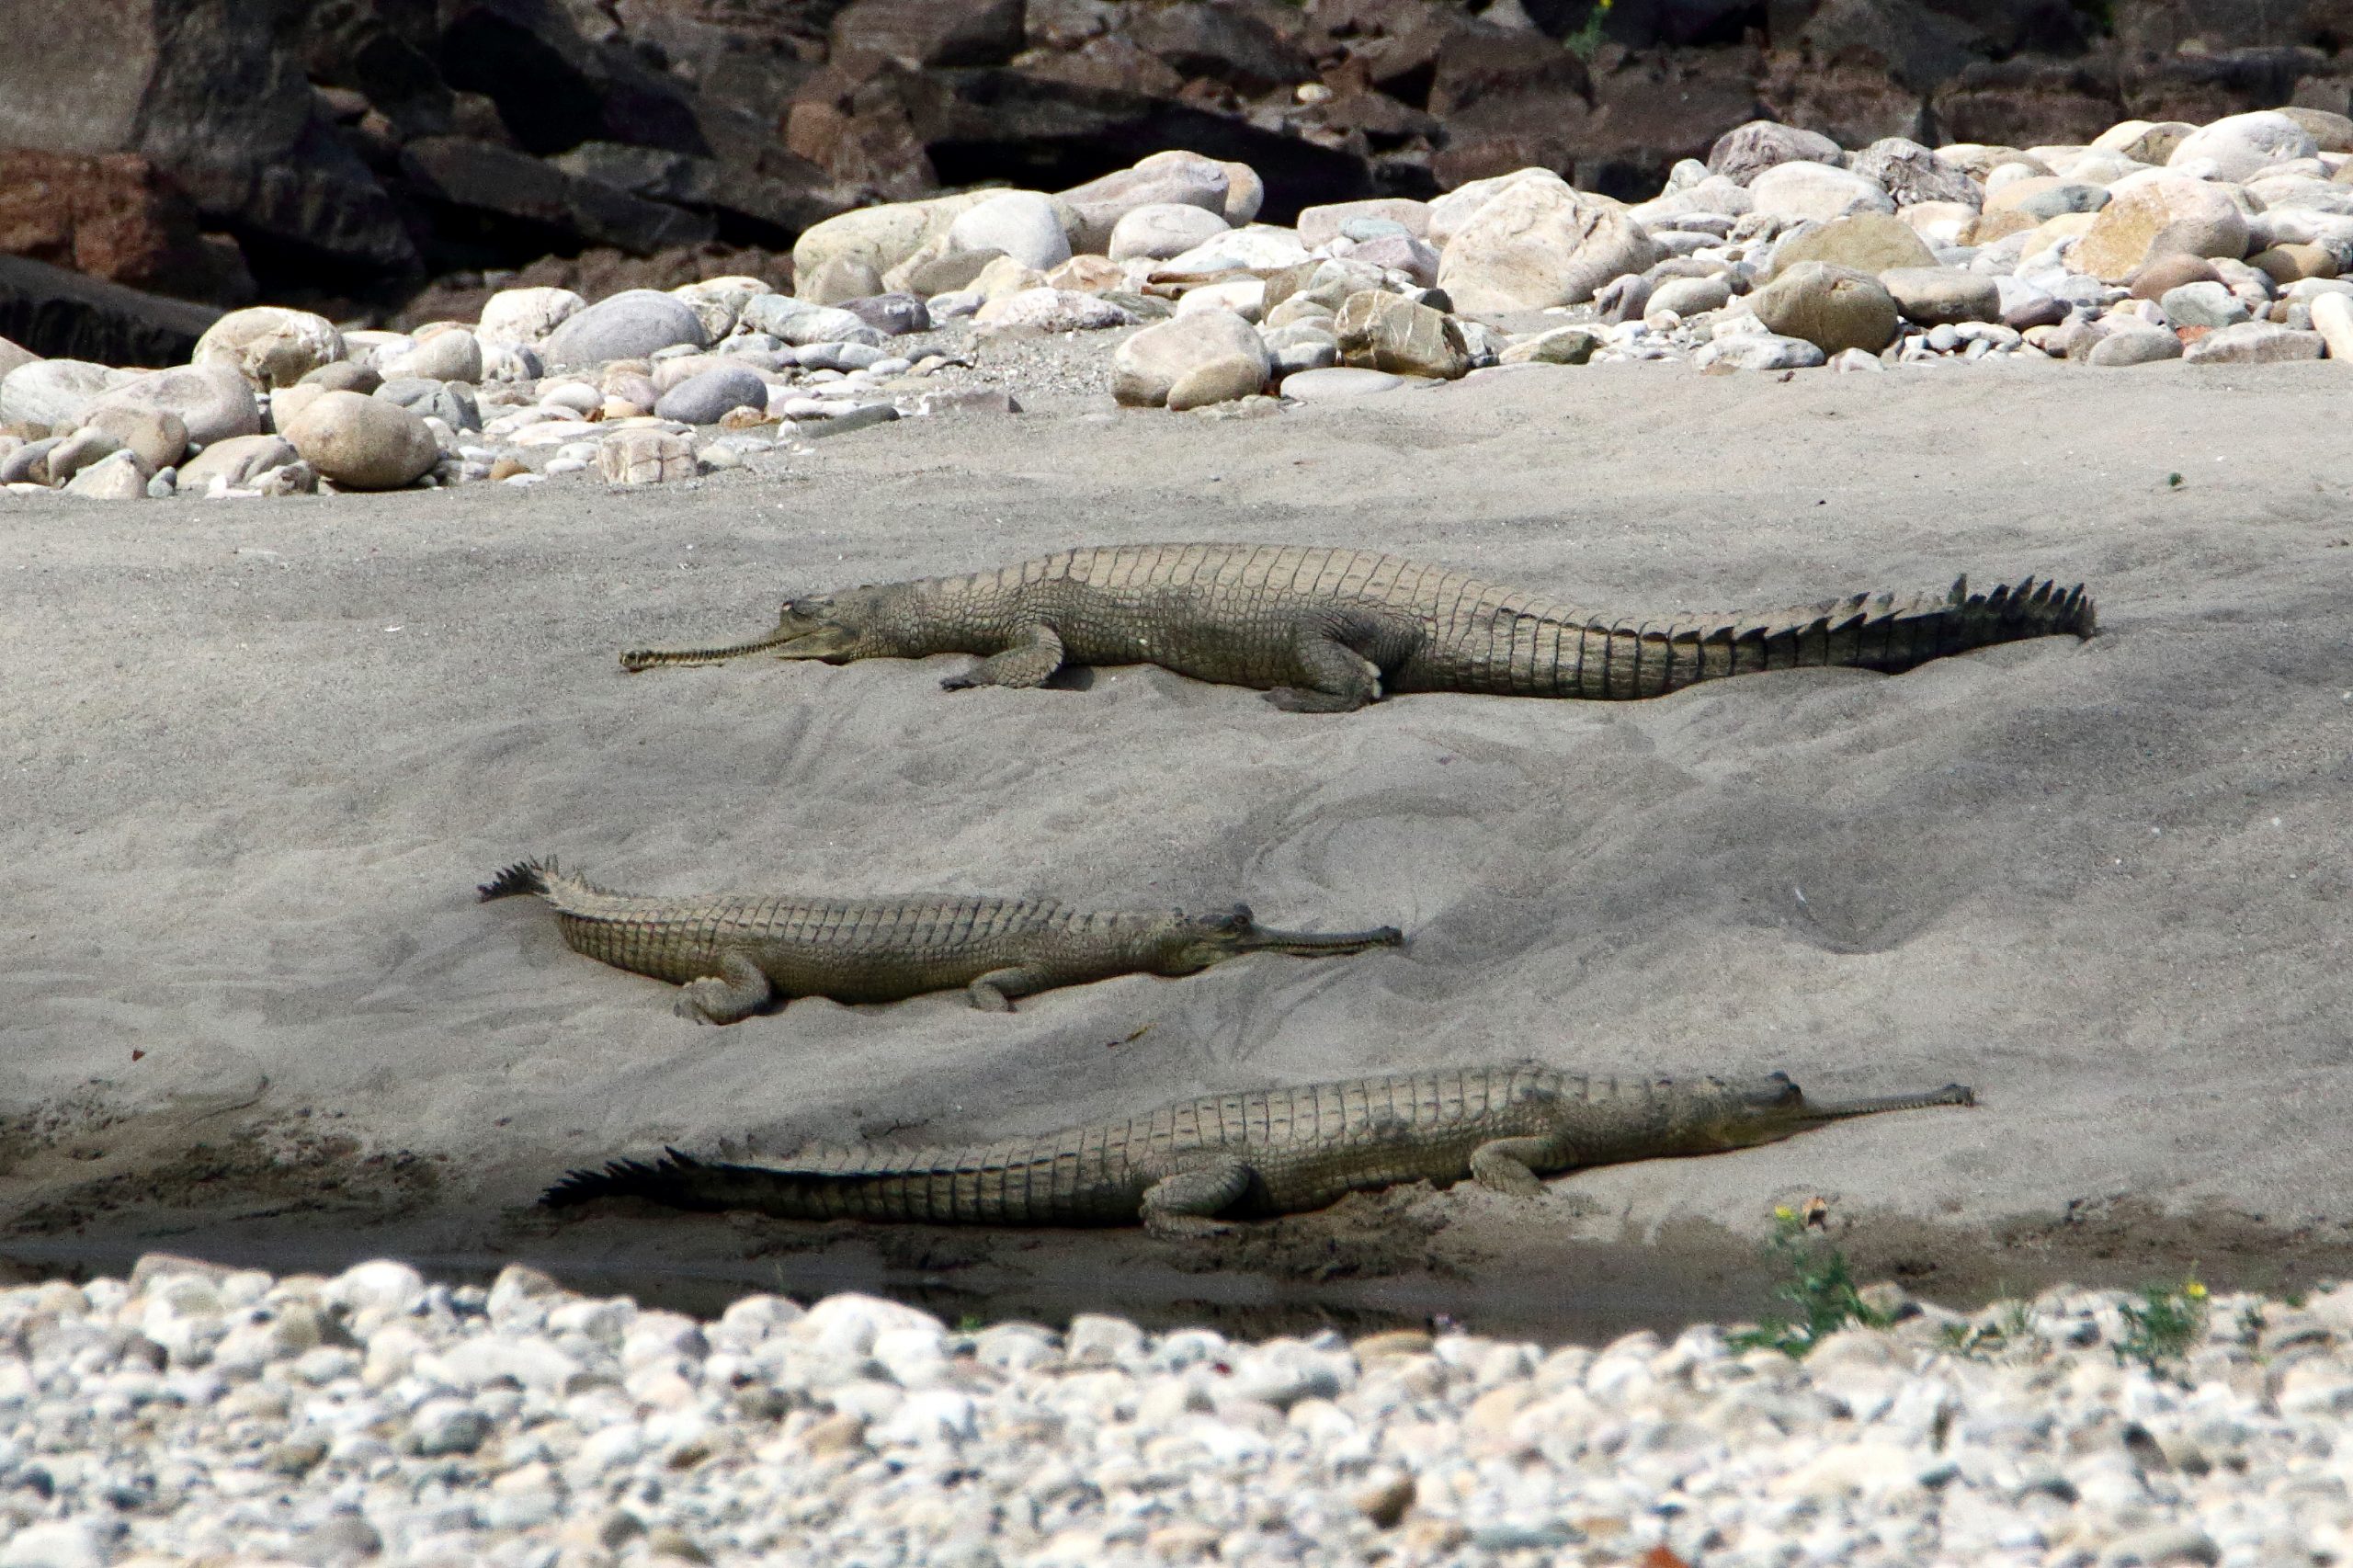 A group of crocodiles